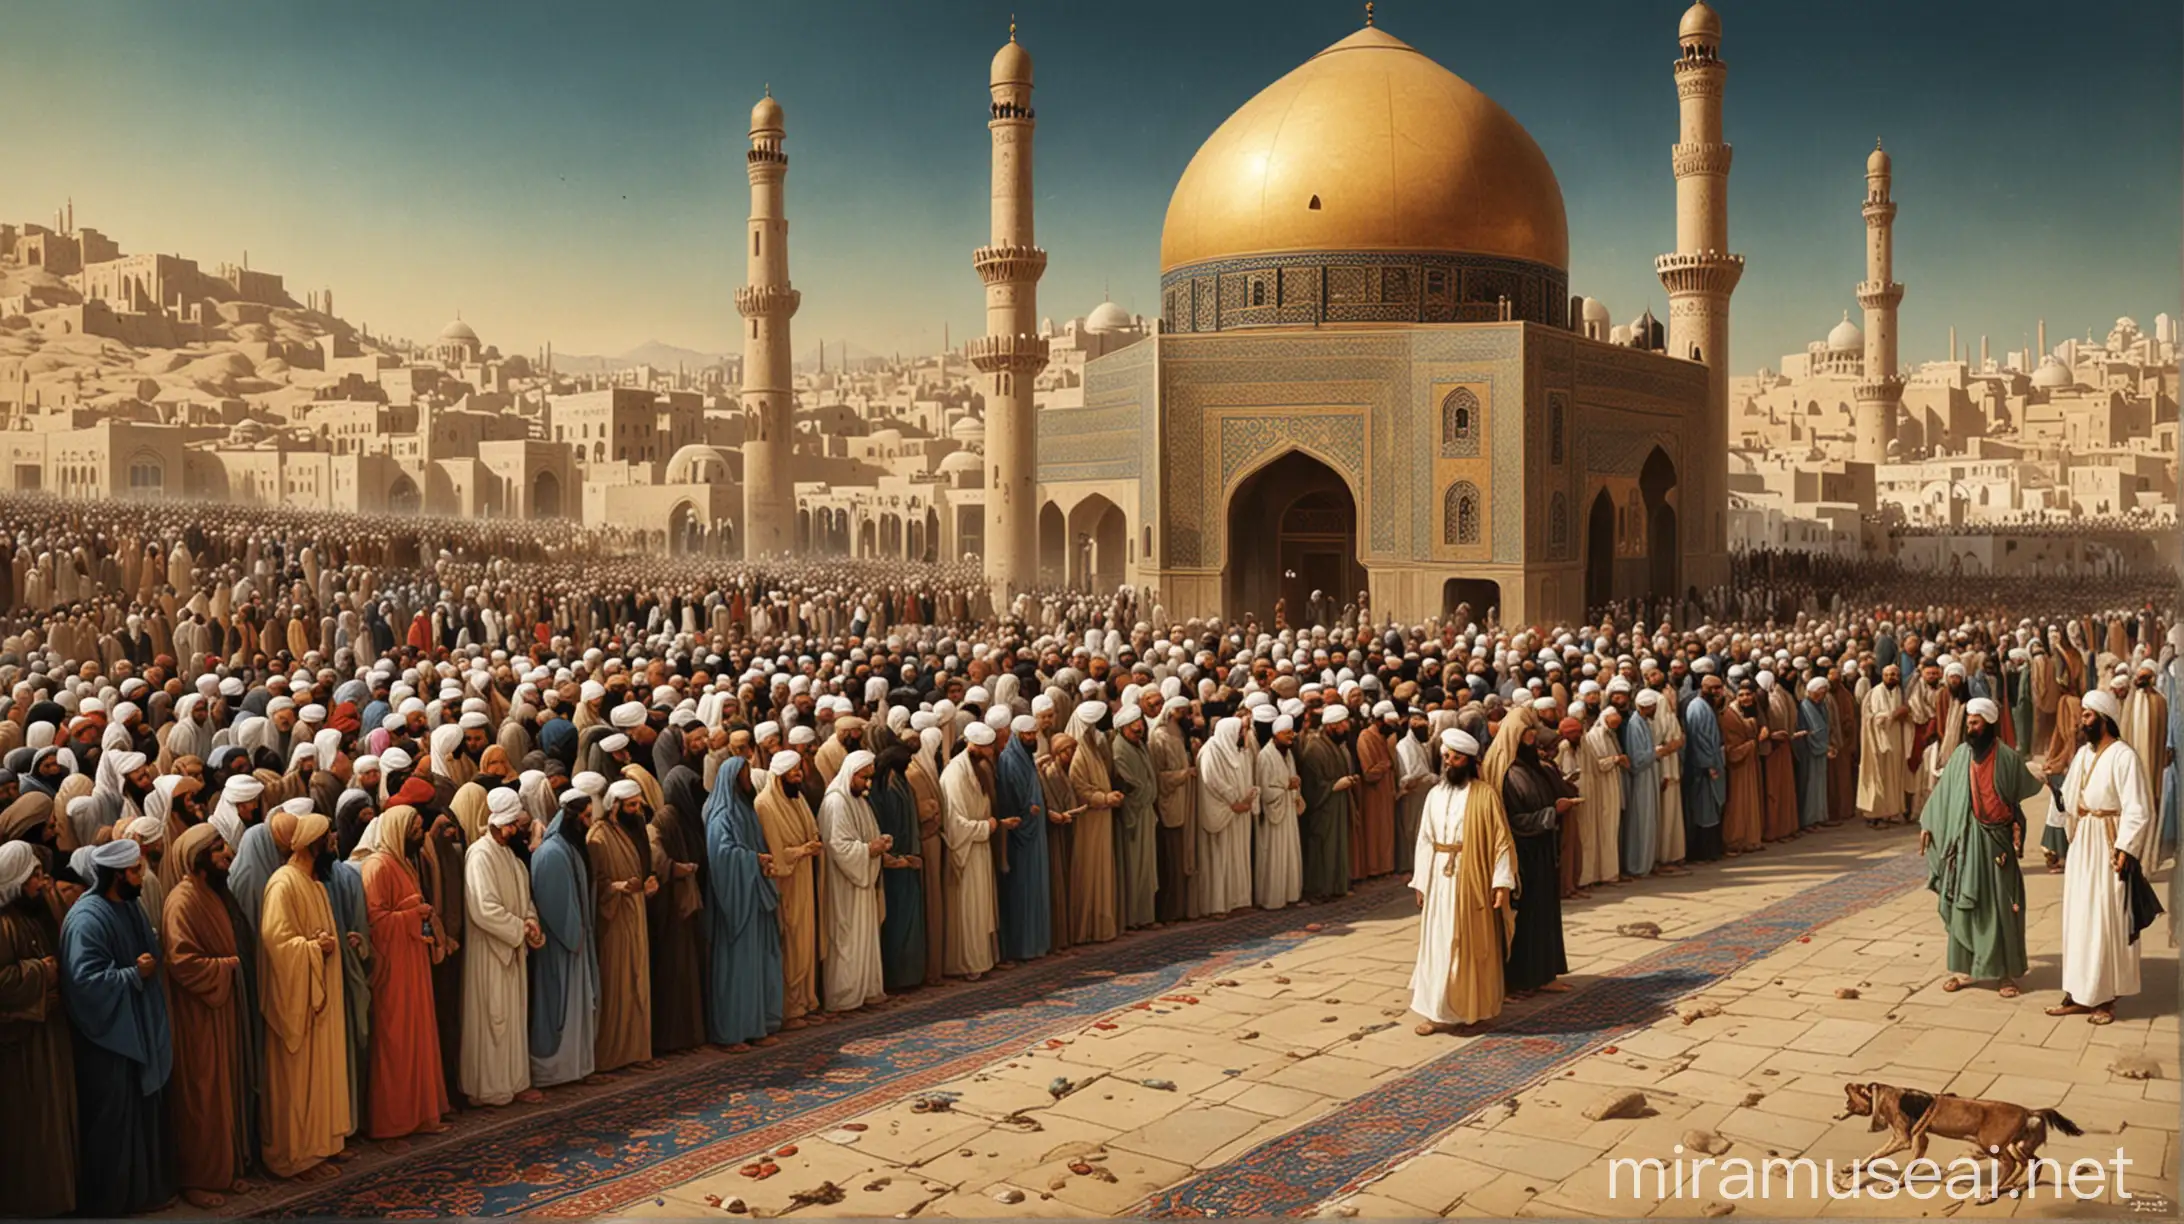 Hazrat Ali ibn Abi Talib RA Early Life and Influence on Islam